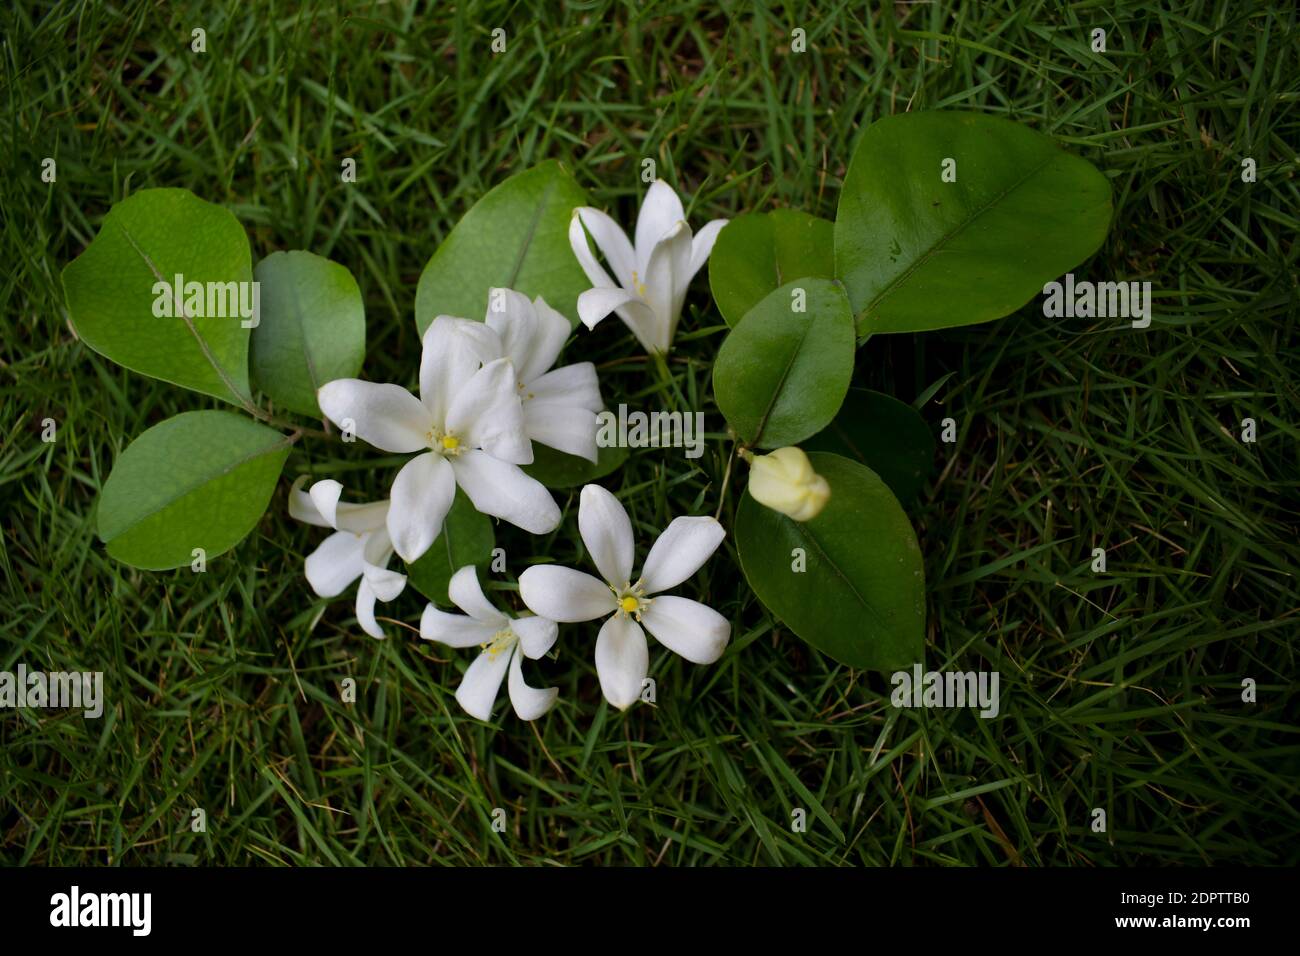 Orange jasmine flowers hi-res stock photography and images - Alamy